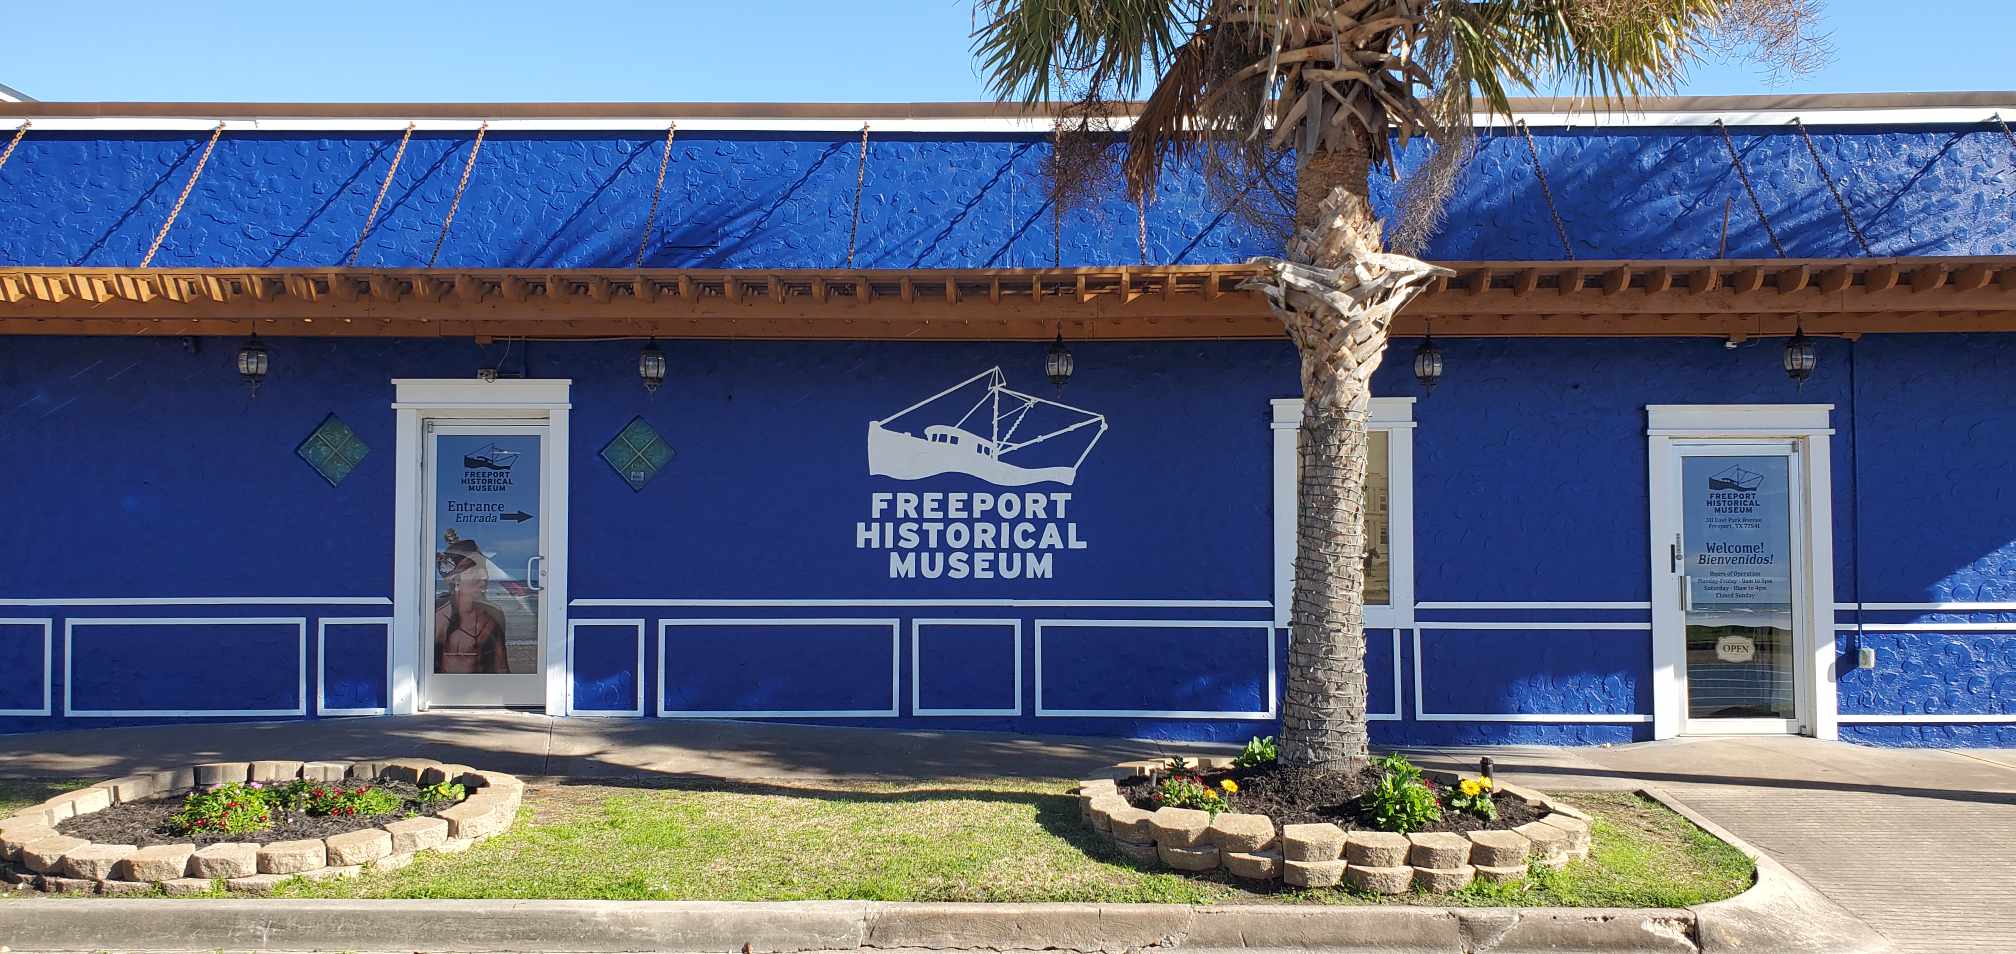 Freeport Historical Museum